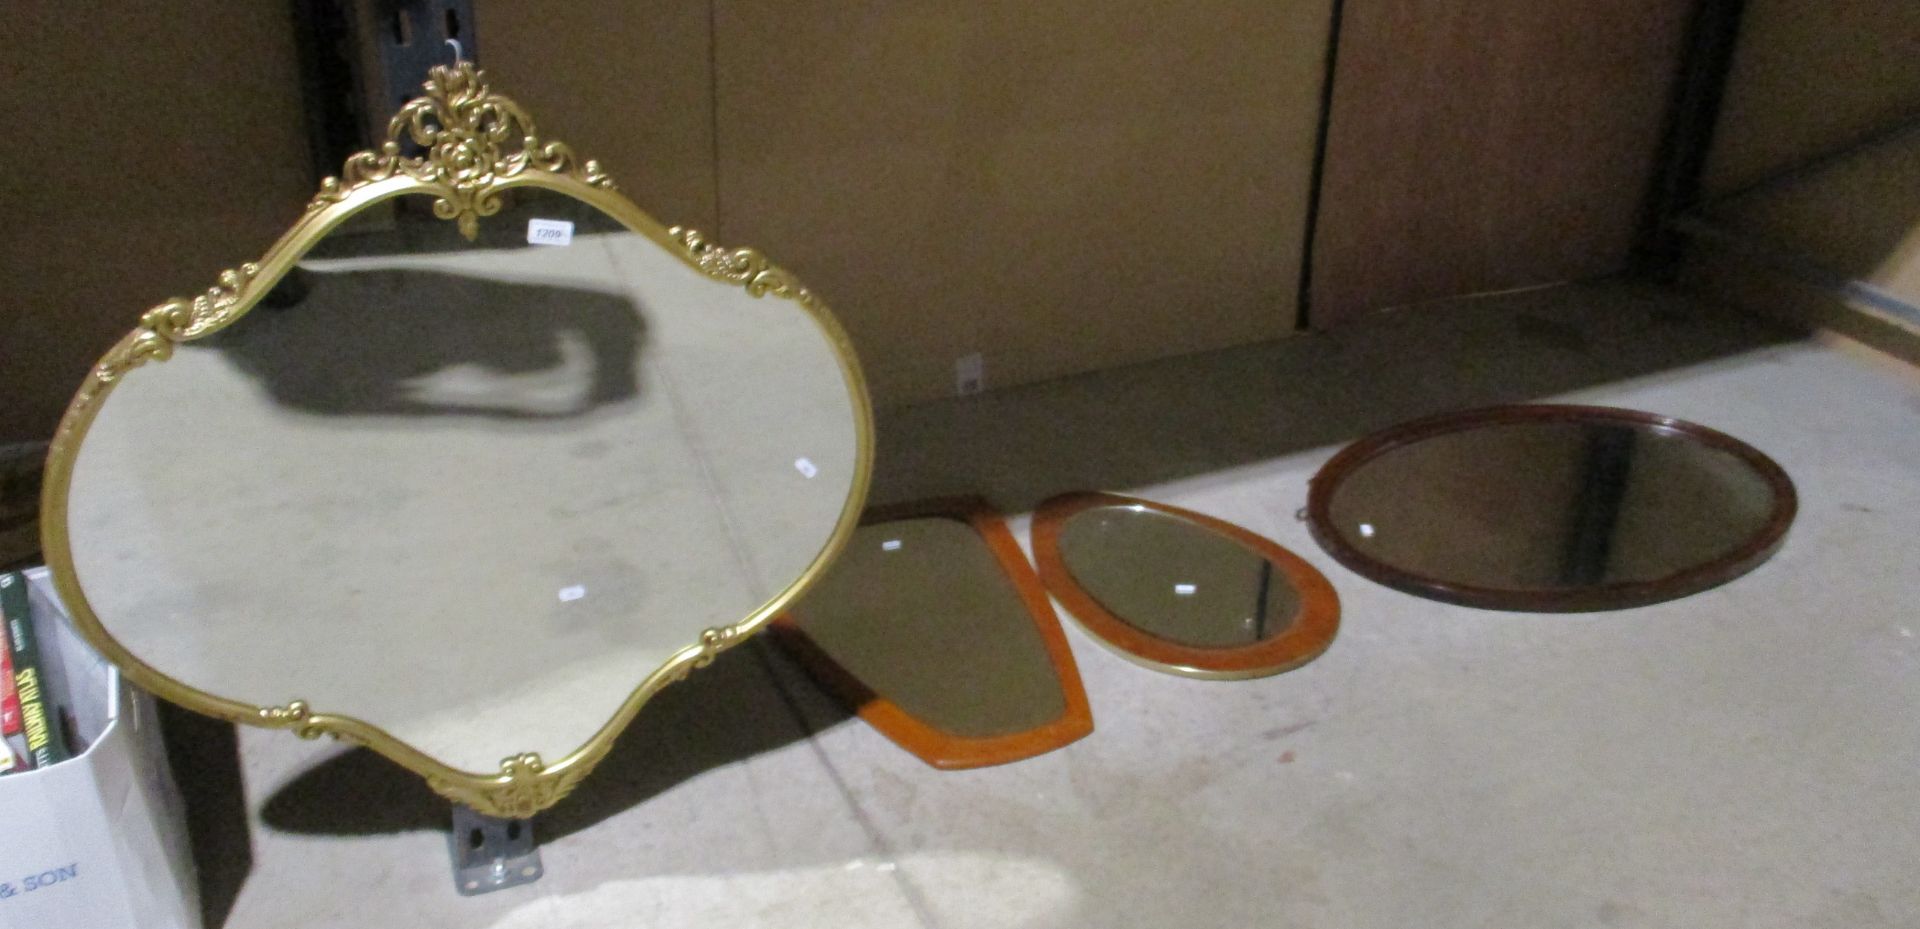 A gilt framed wall mirror,